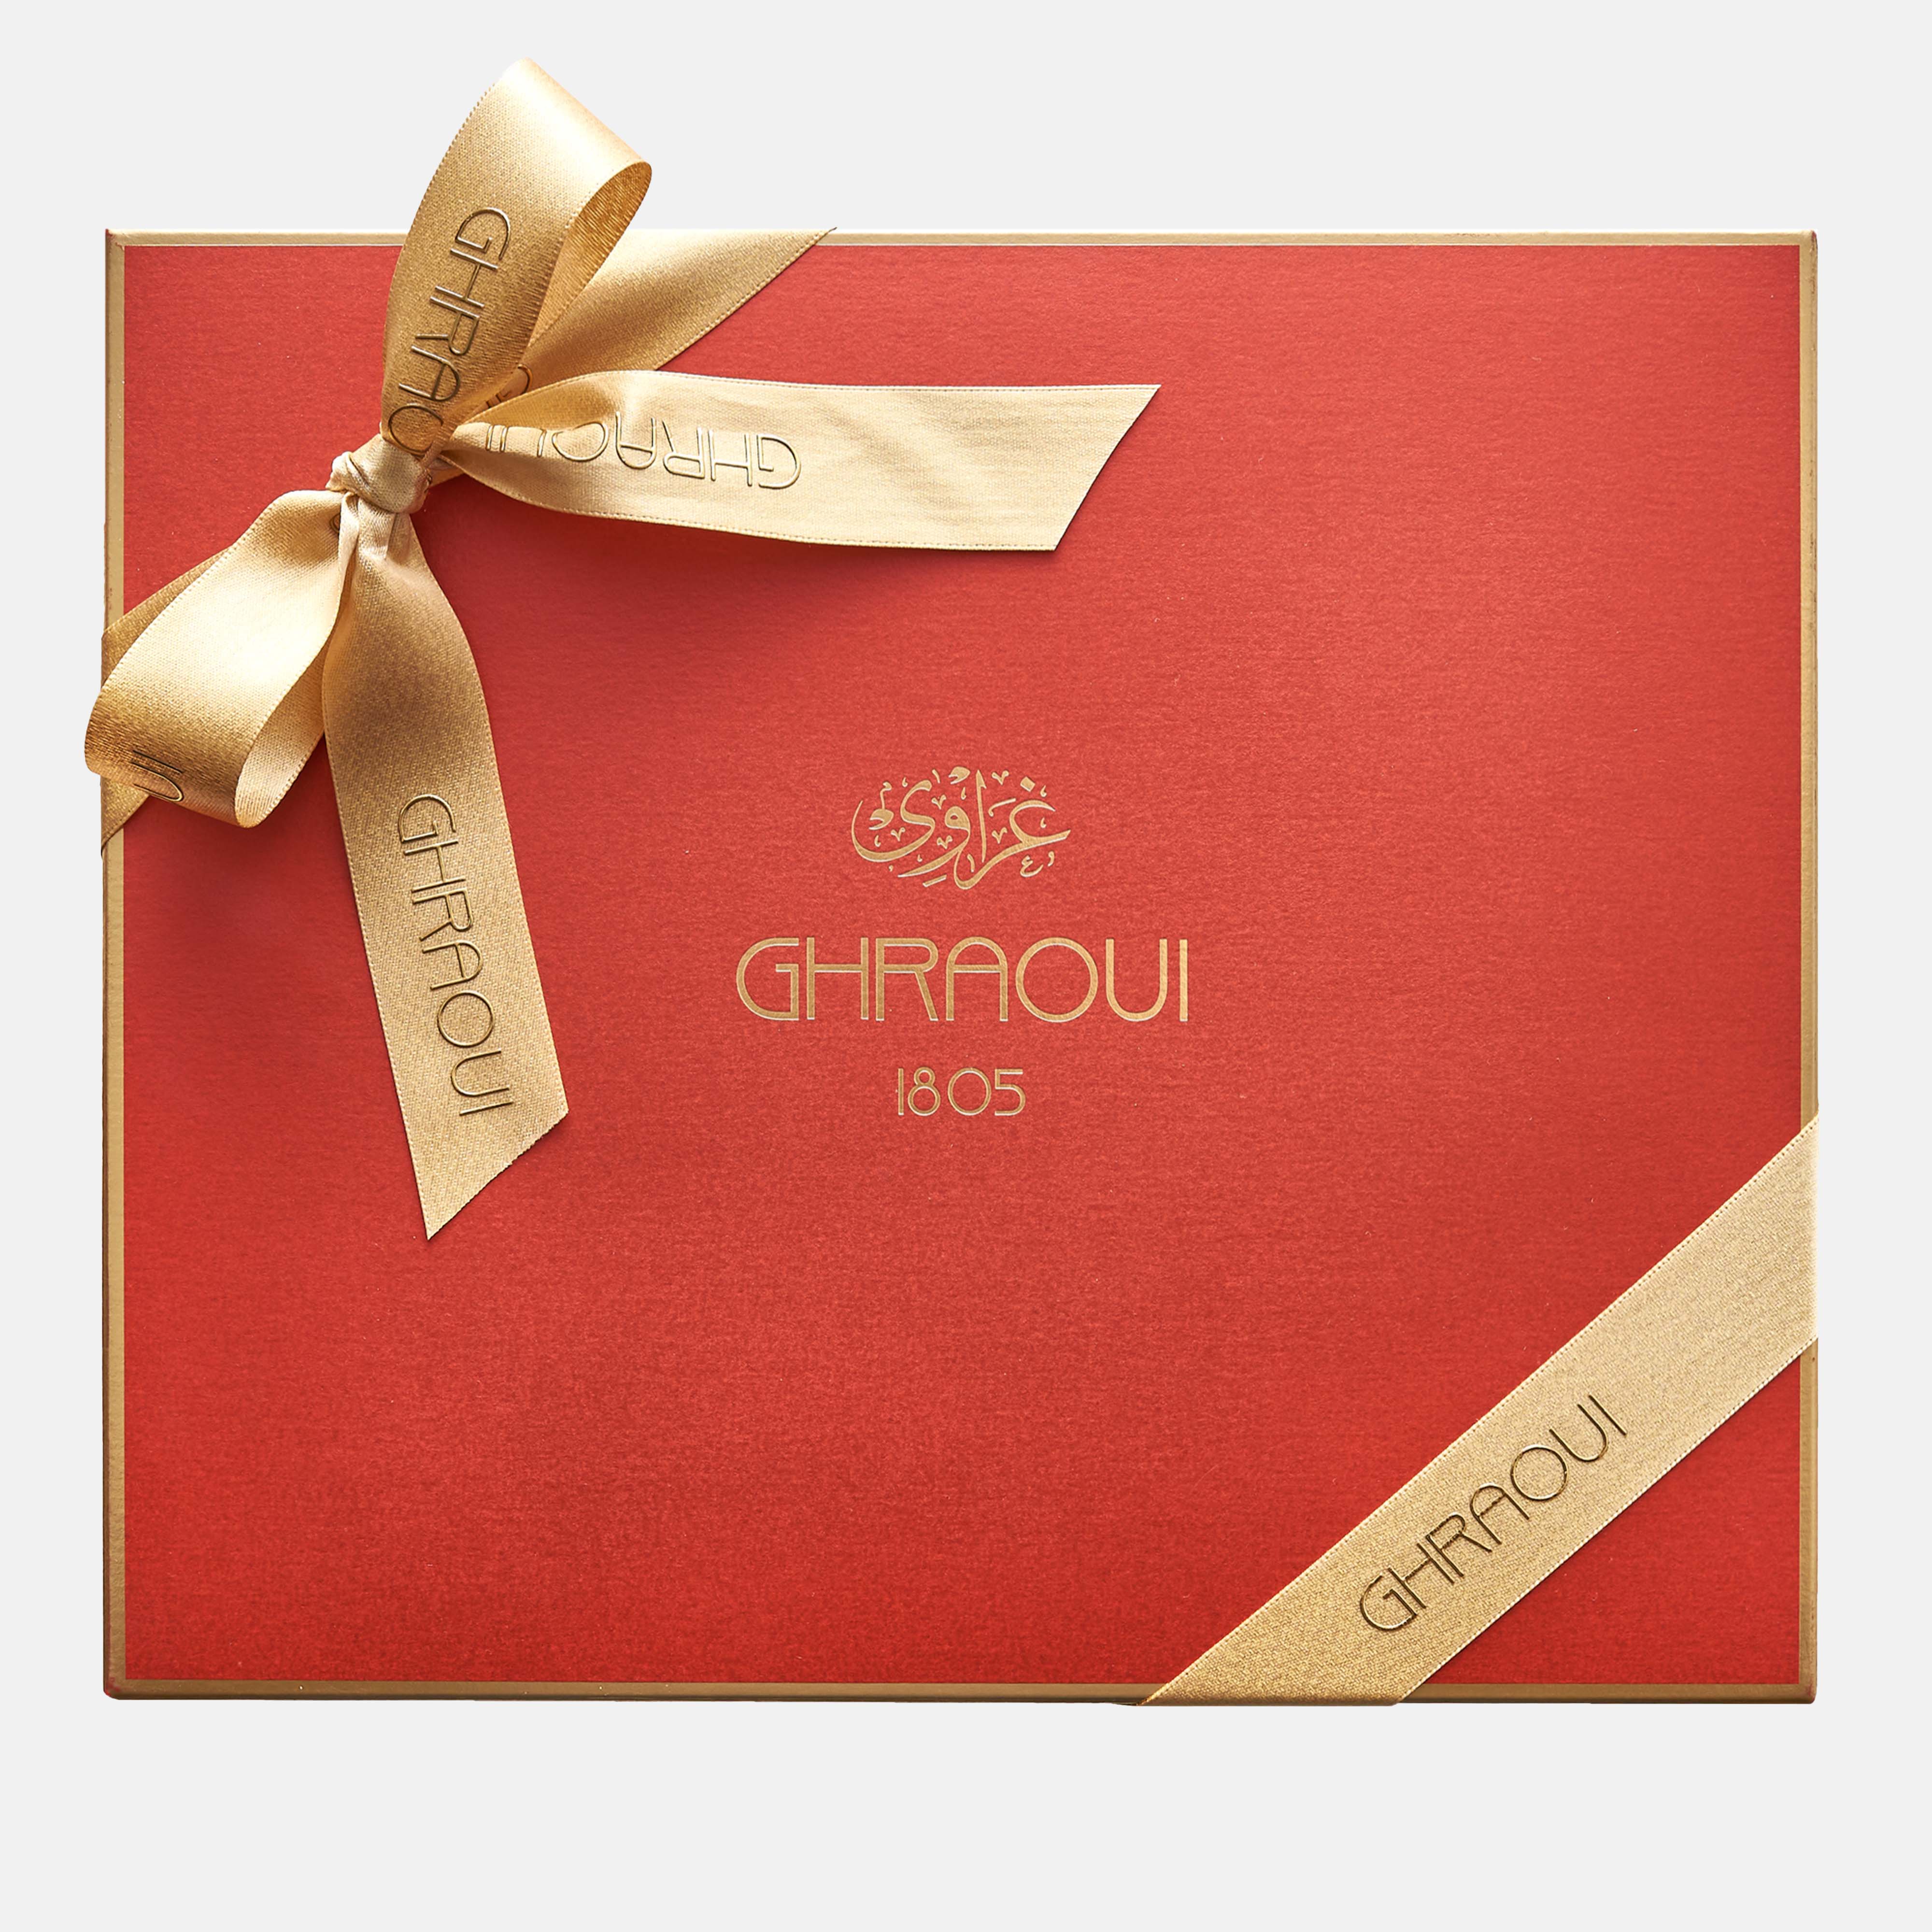 Grande Christmas Chocolate Selection Velvet Red